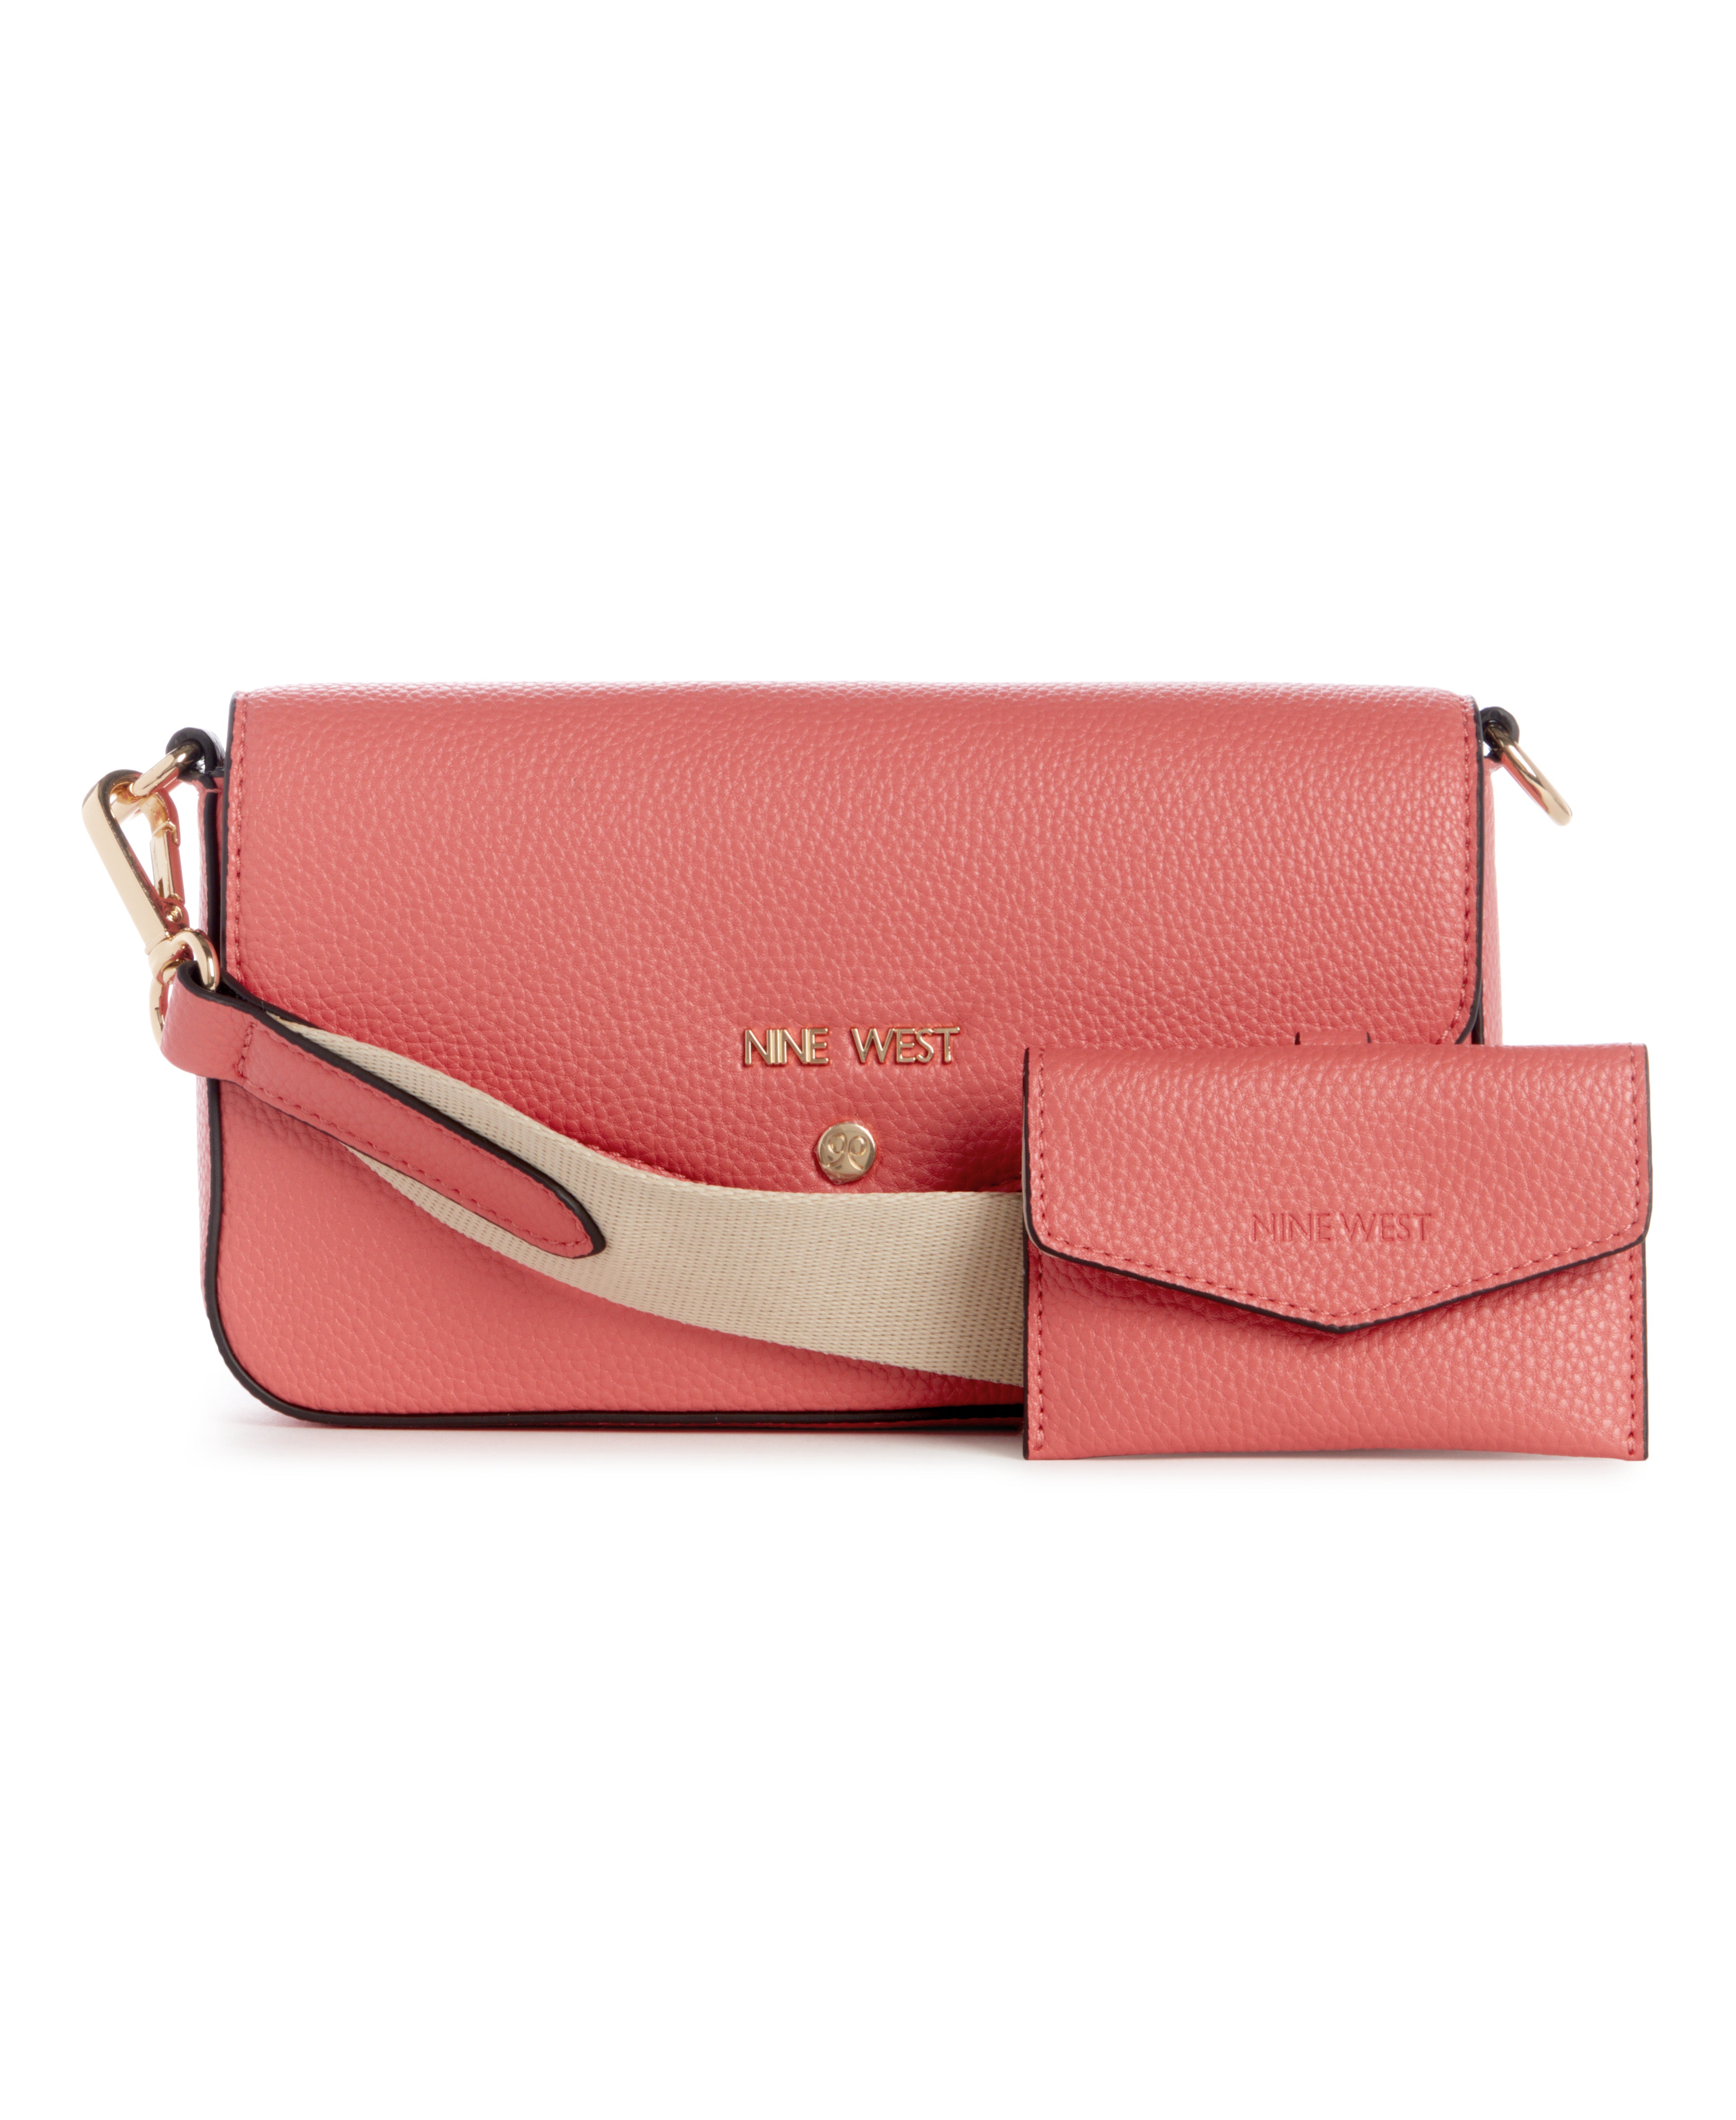 NINE WEST Judilee Mini Flap Crossbody Light Pastel Pink One Size: Handbags:  Amazon.com